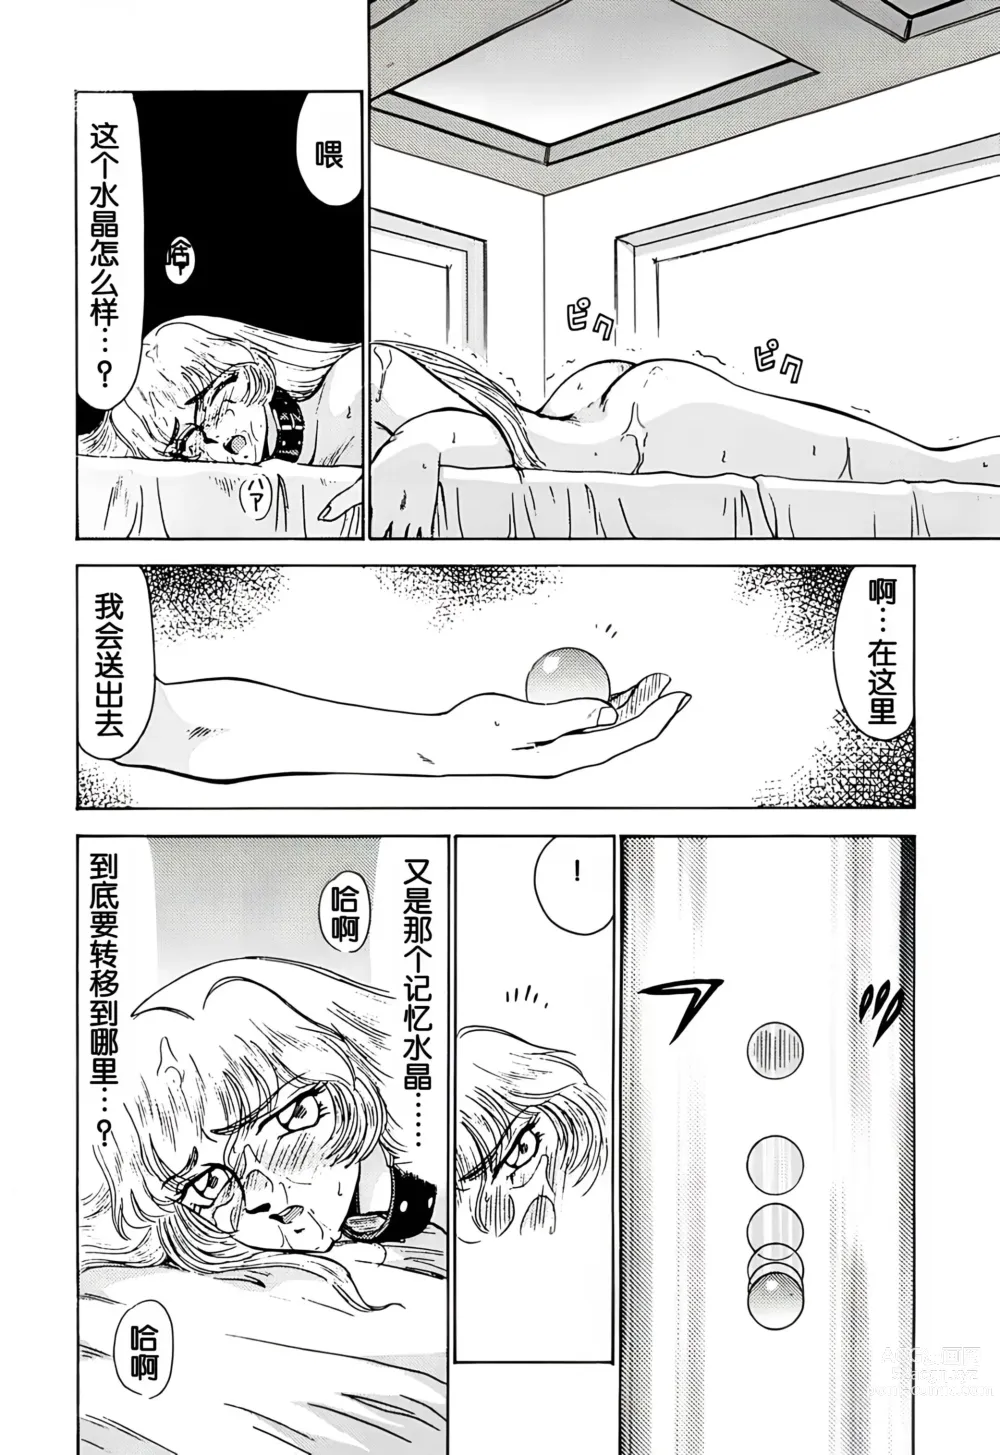 Page 16 of doujinshi Nise DRAGON BLOOD! 2.